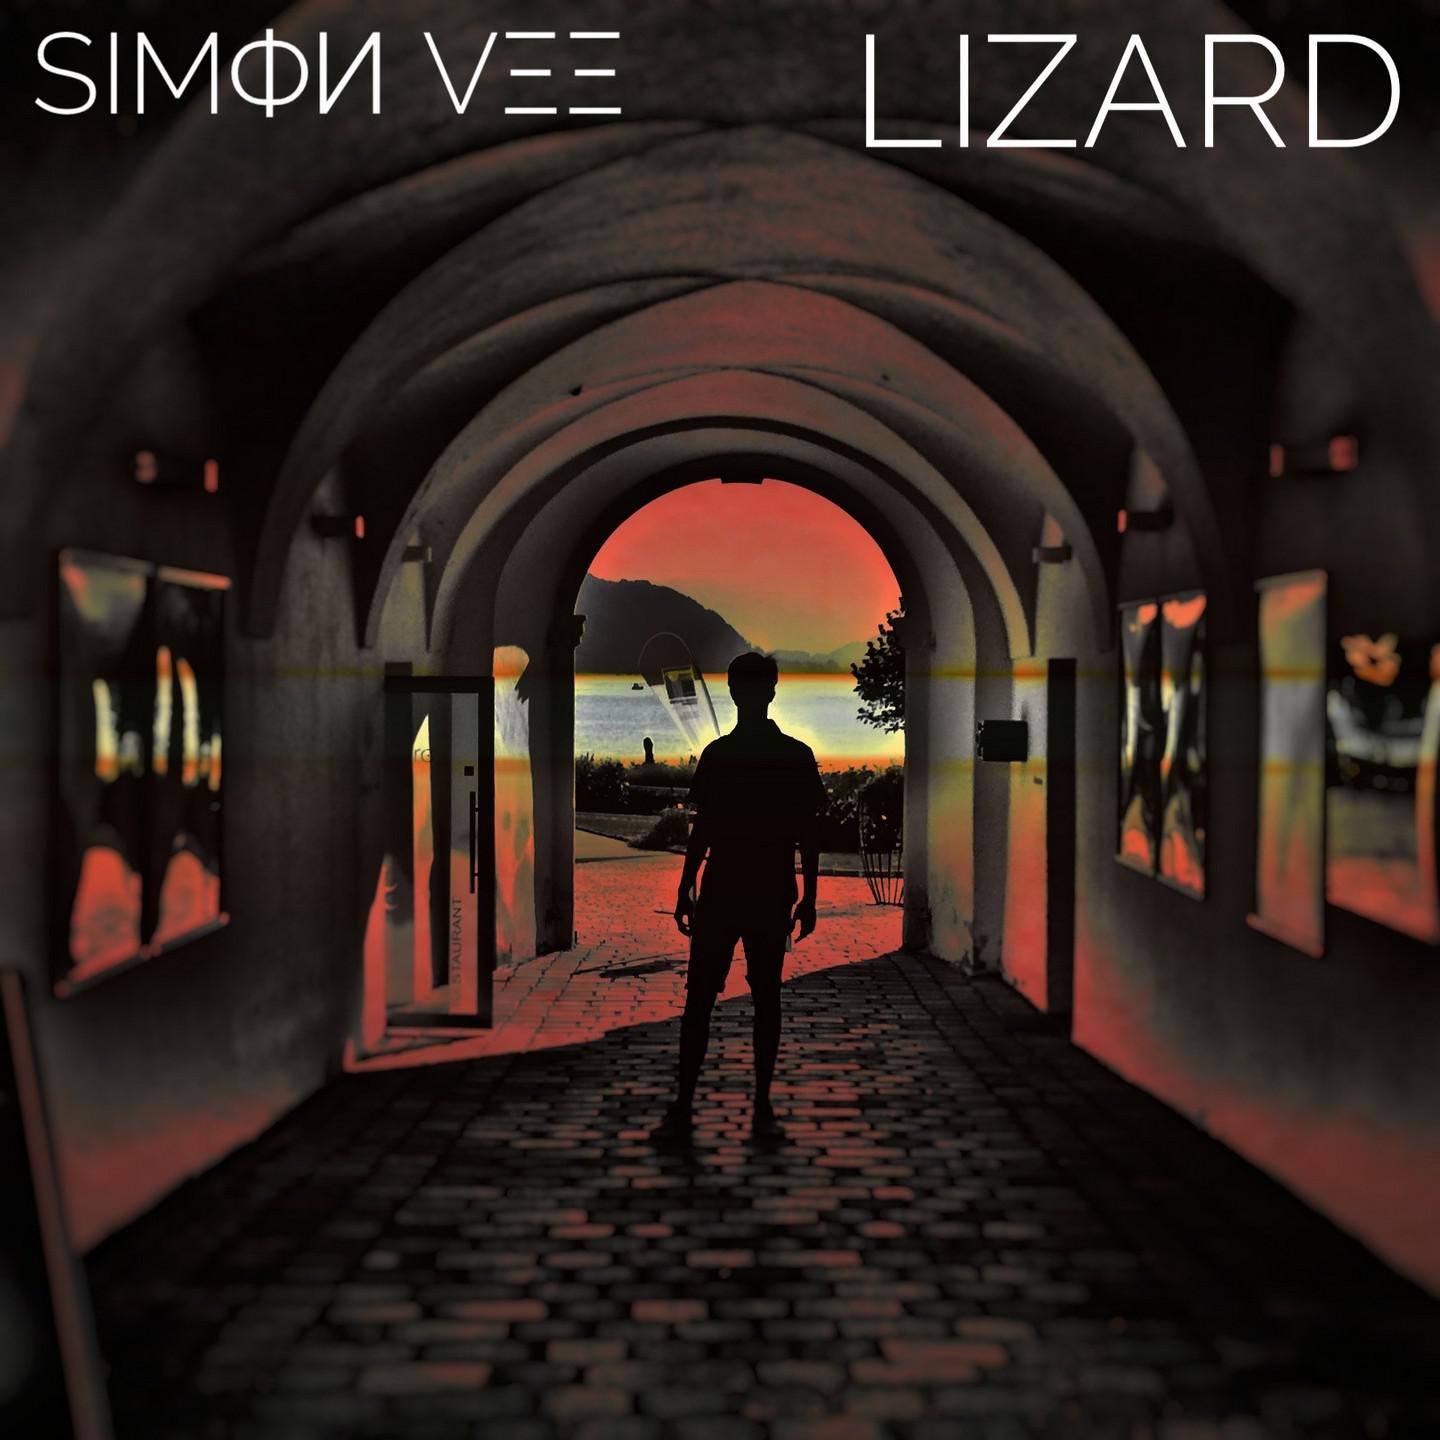 Simon Vee - Lizard